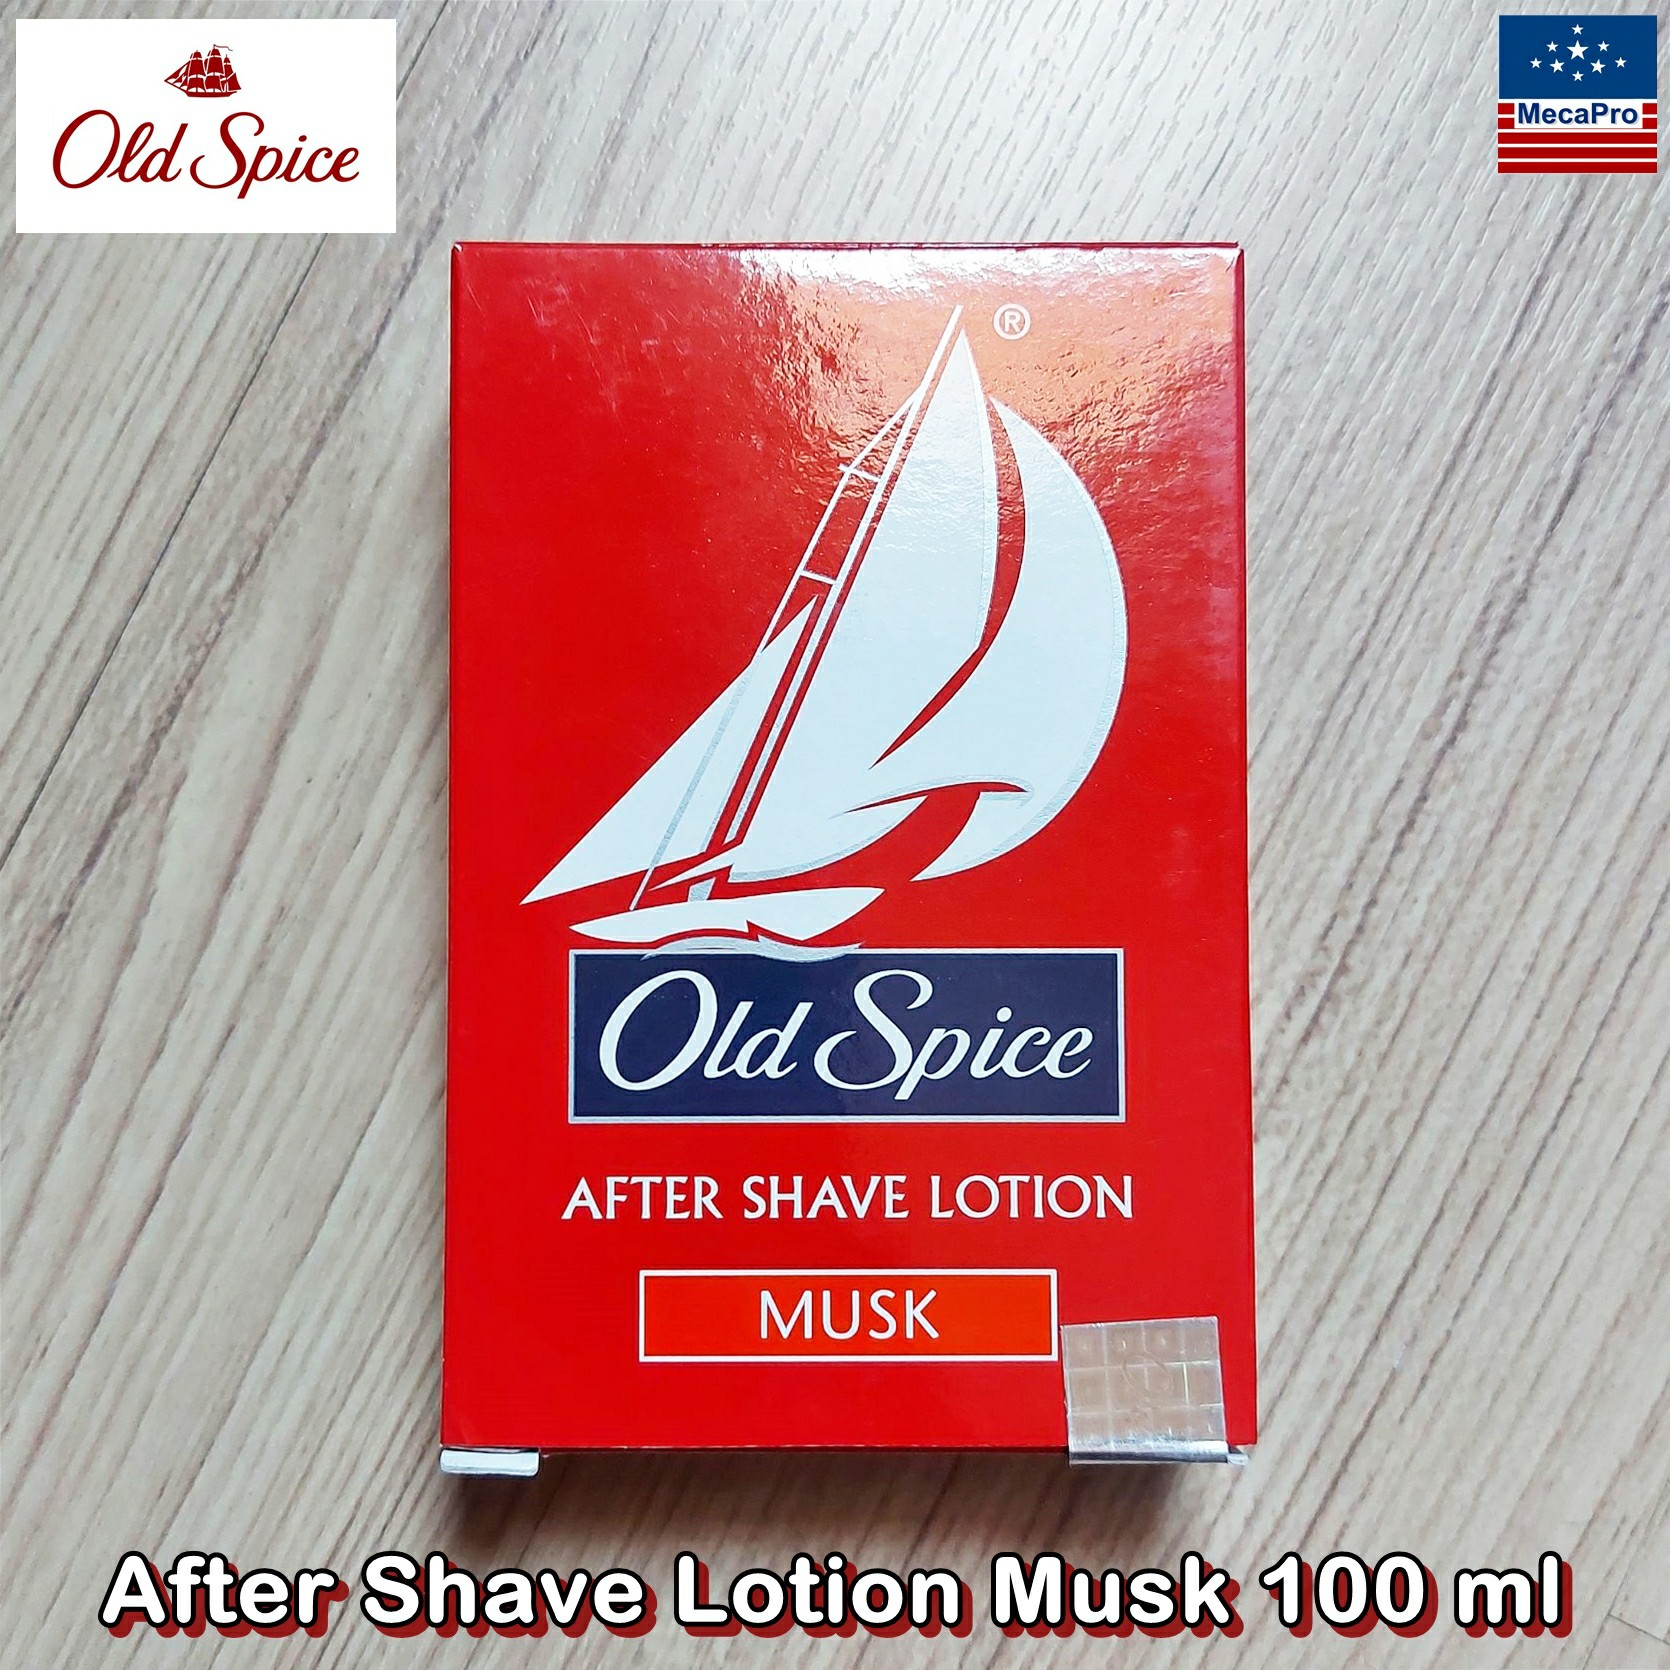 Old Spice® After Shave Lotion Musk 100 ml โอลด์ สไปซ์ ผลิตภัณฑ์บำรุงผิวหน้า หลังการโกนหนวด